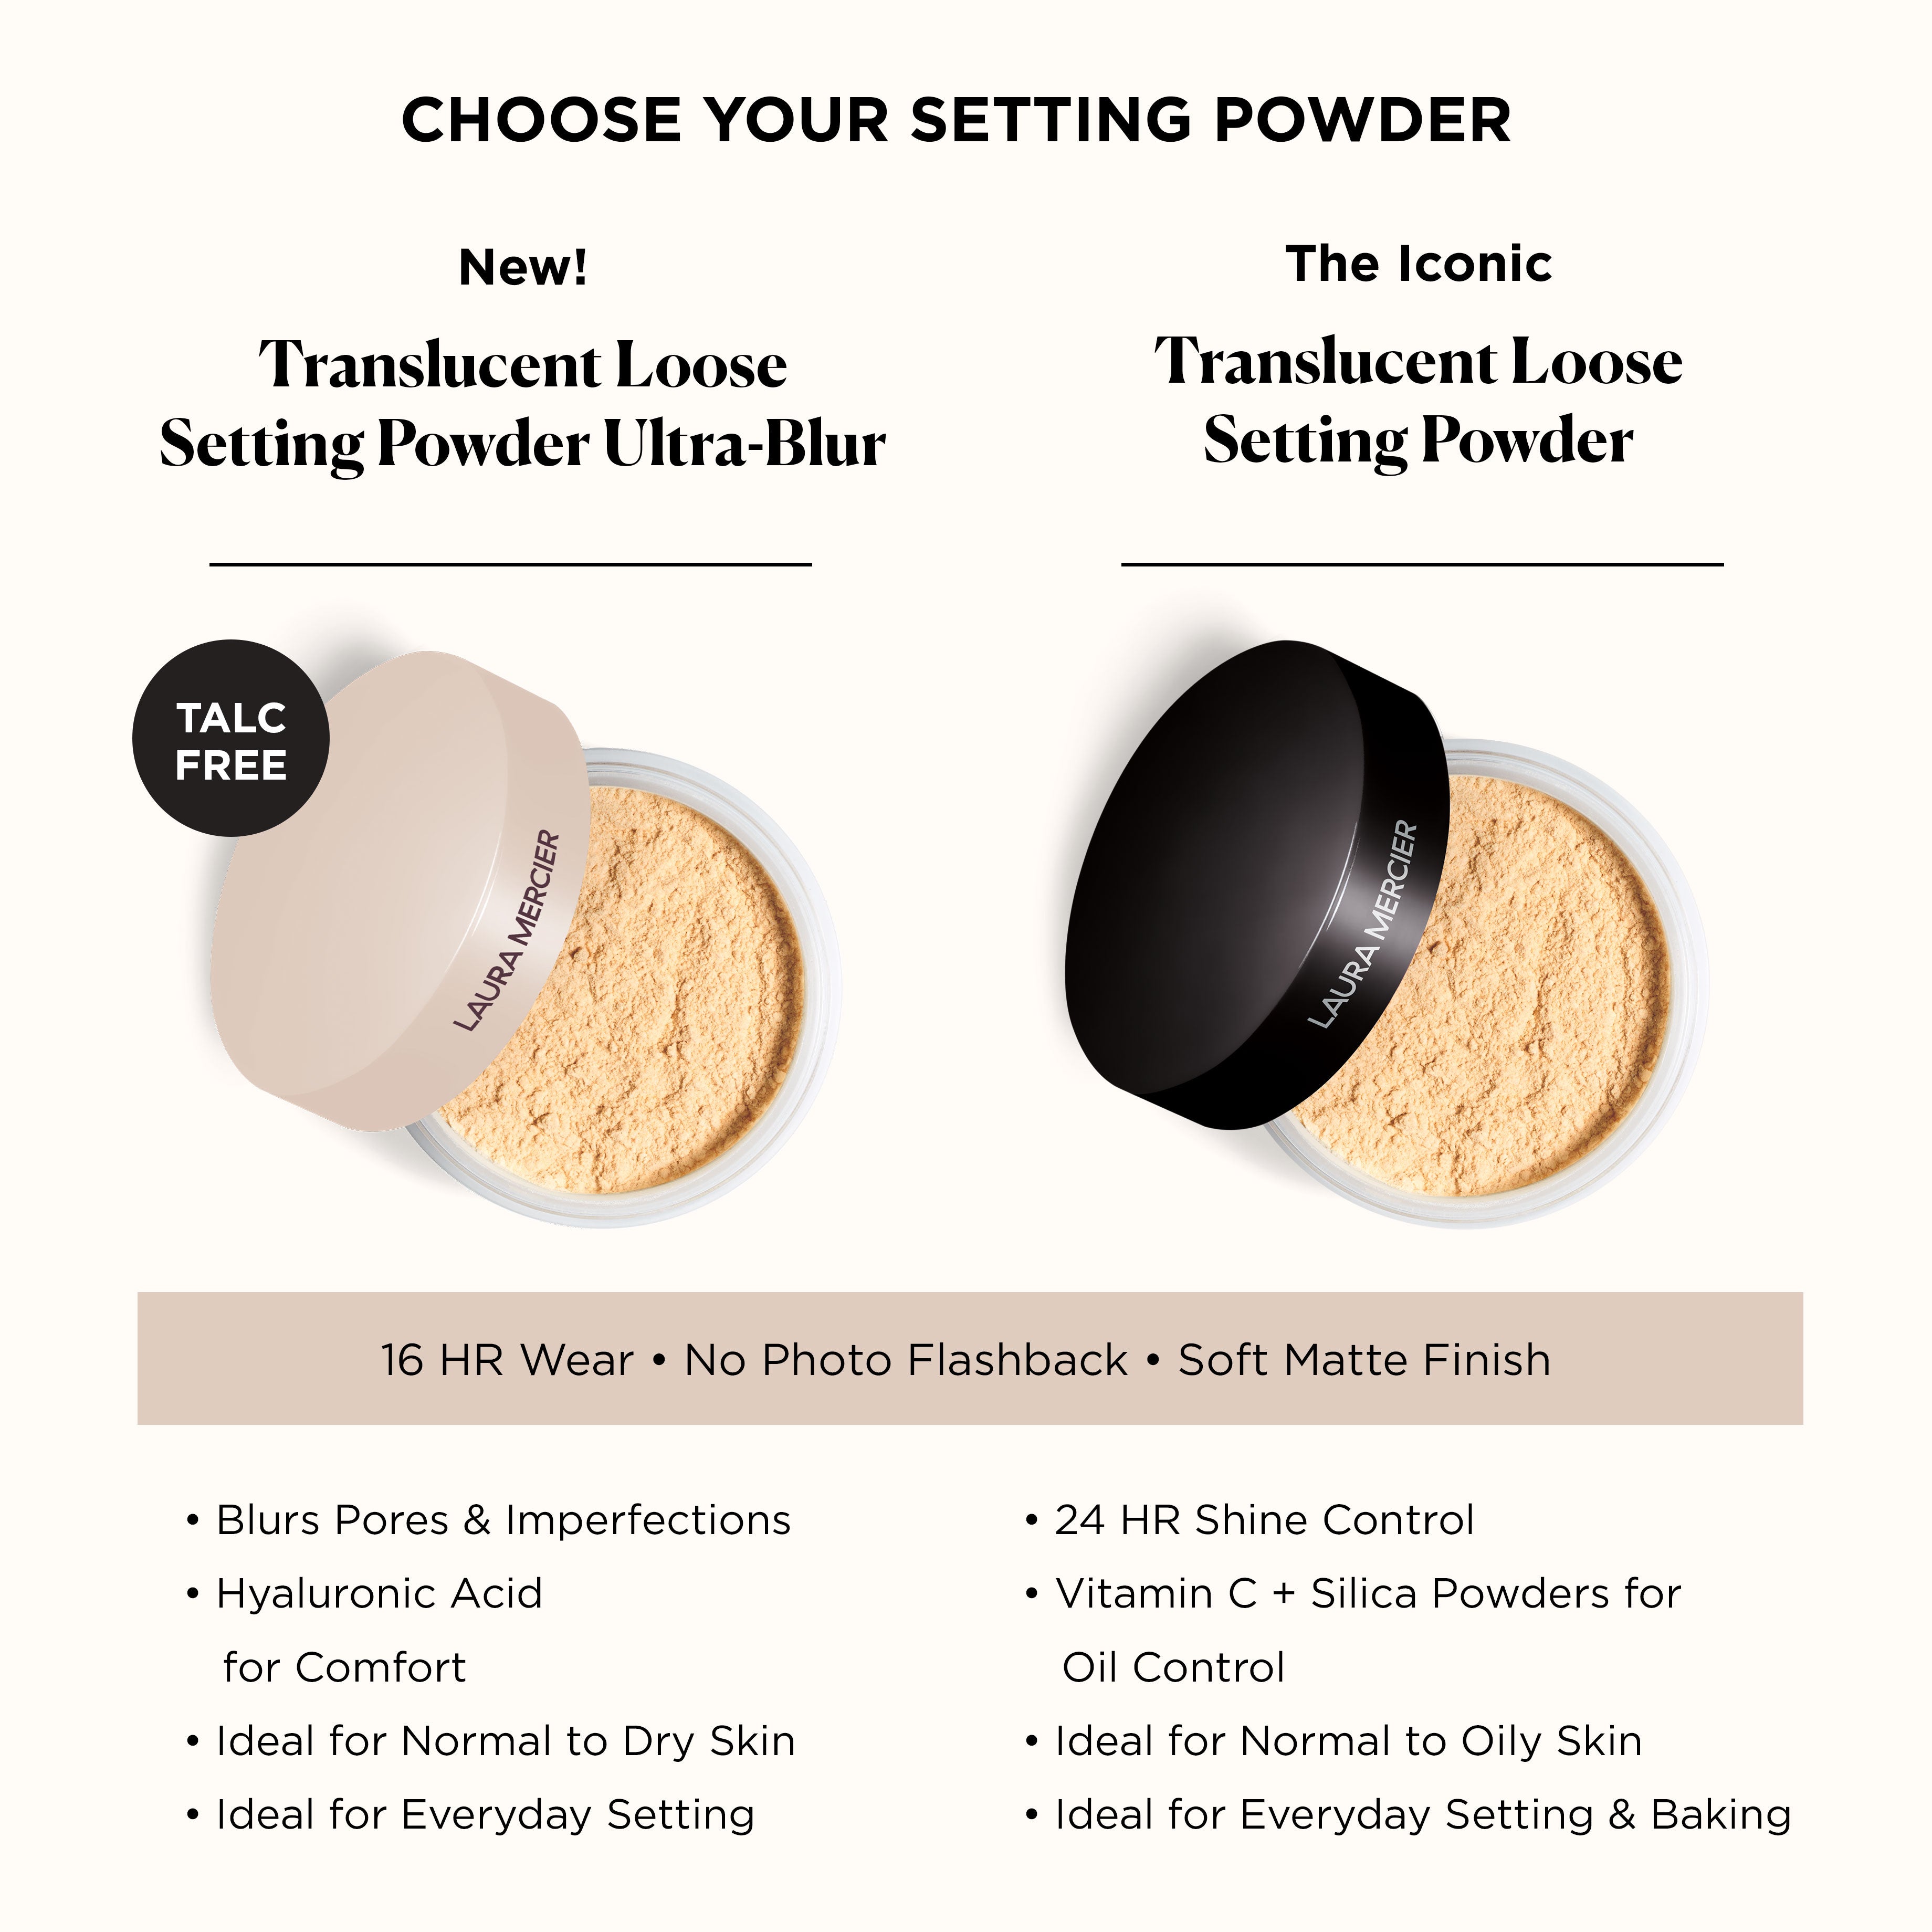 Translucent Loose Setting Powder Ultra-Blur